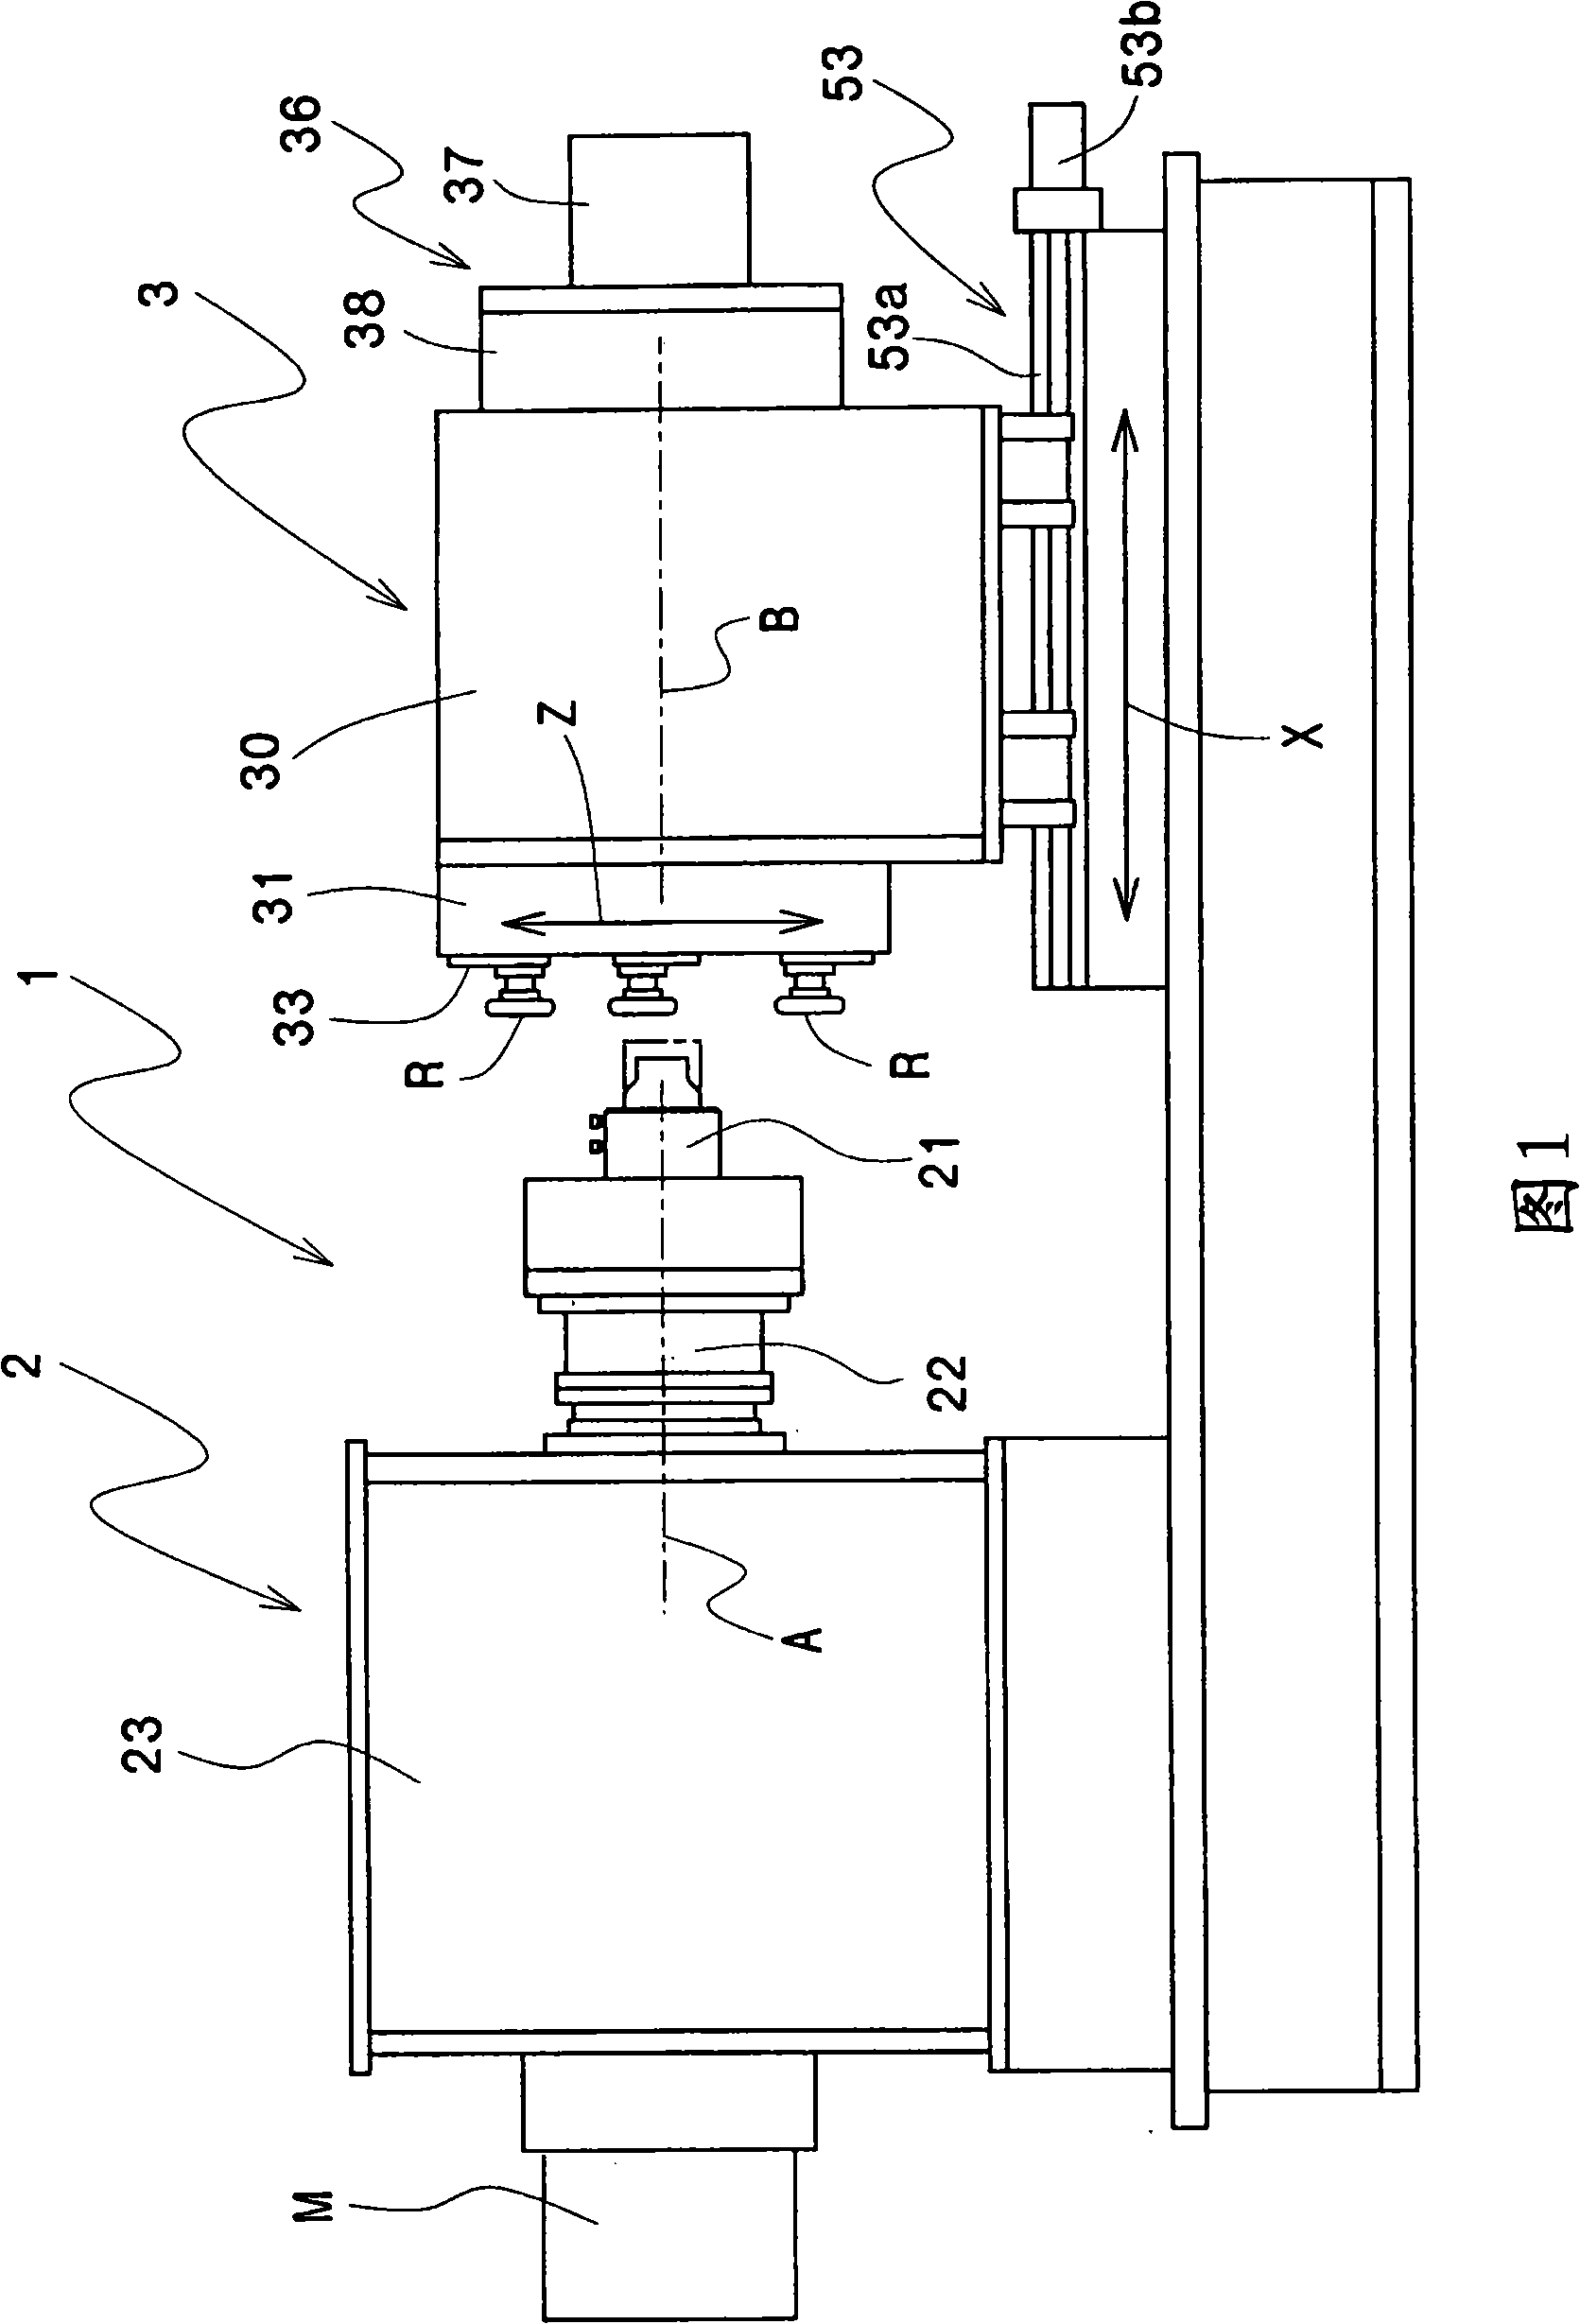 Drawing and processing apparatus